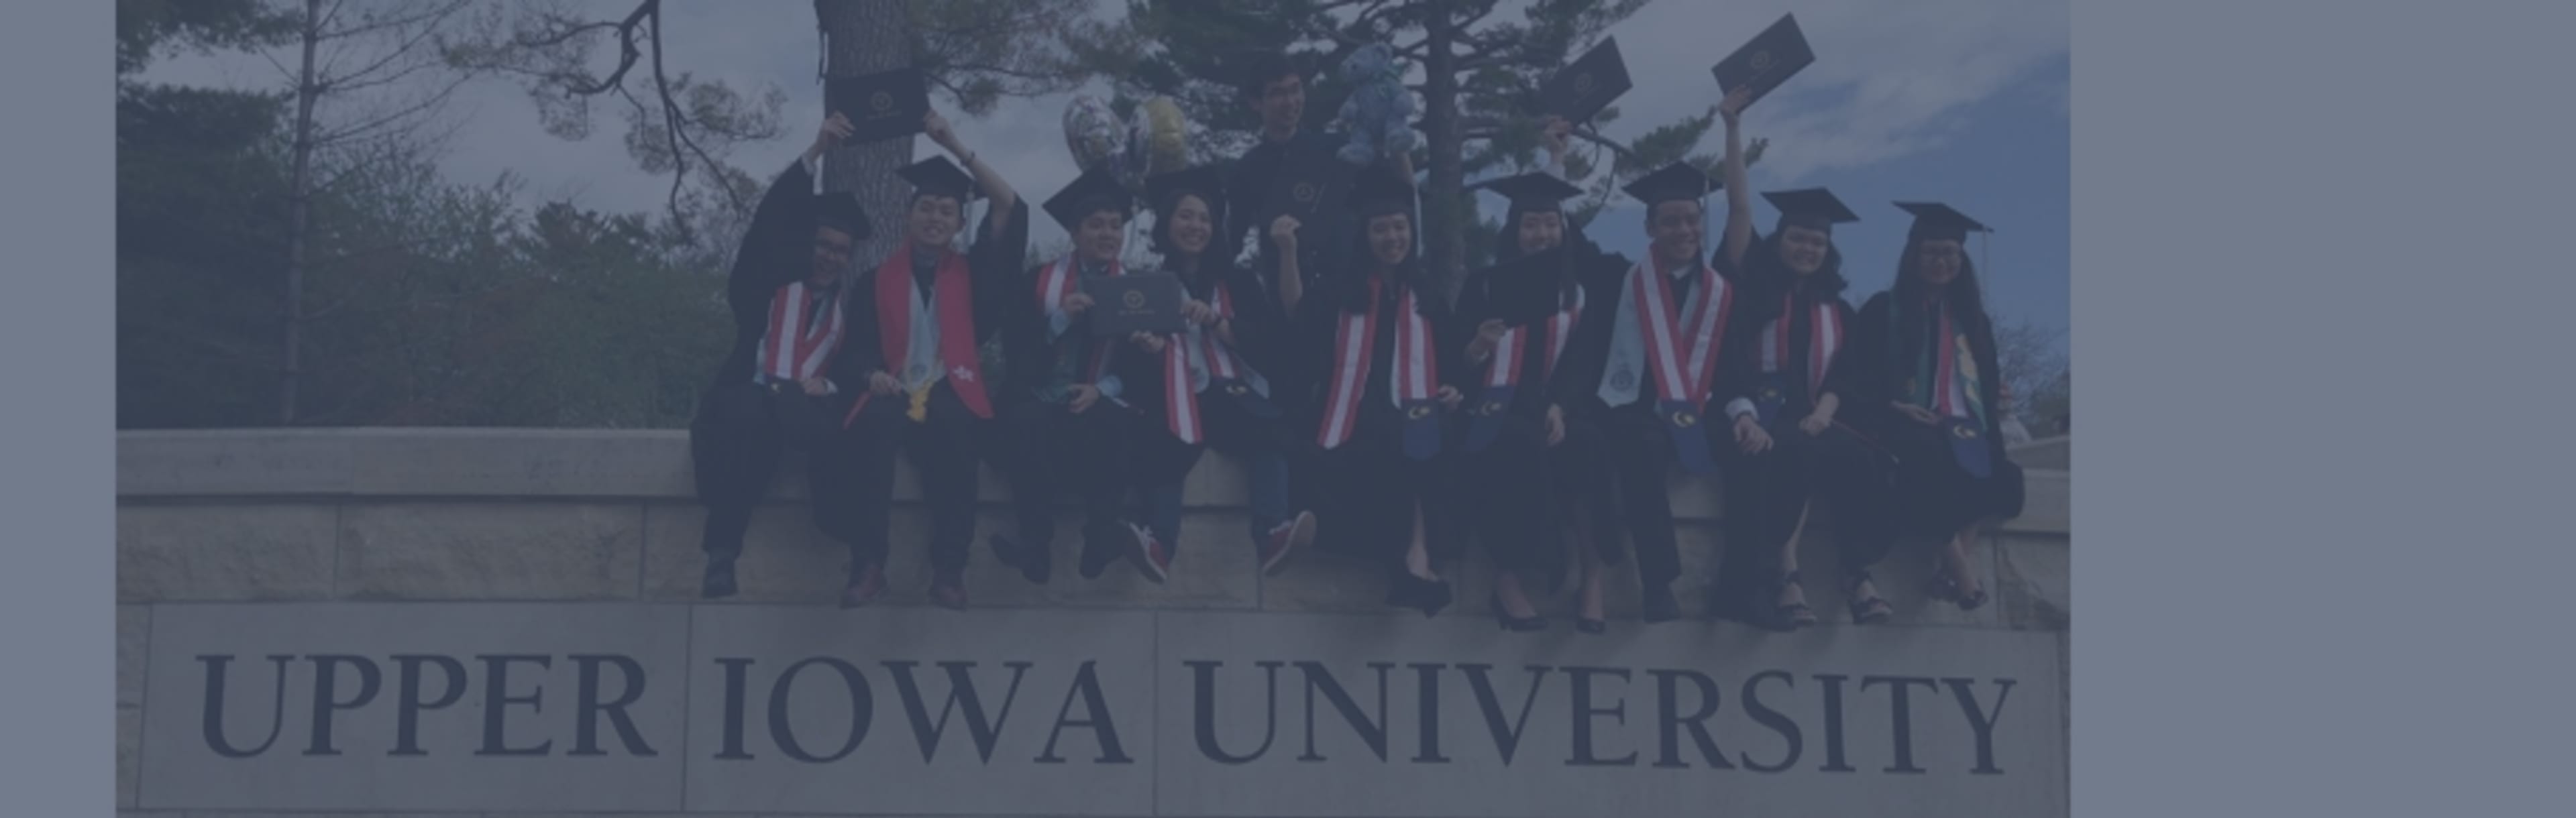 Upper Iowa University MBA en Desarrollo Organizacional